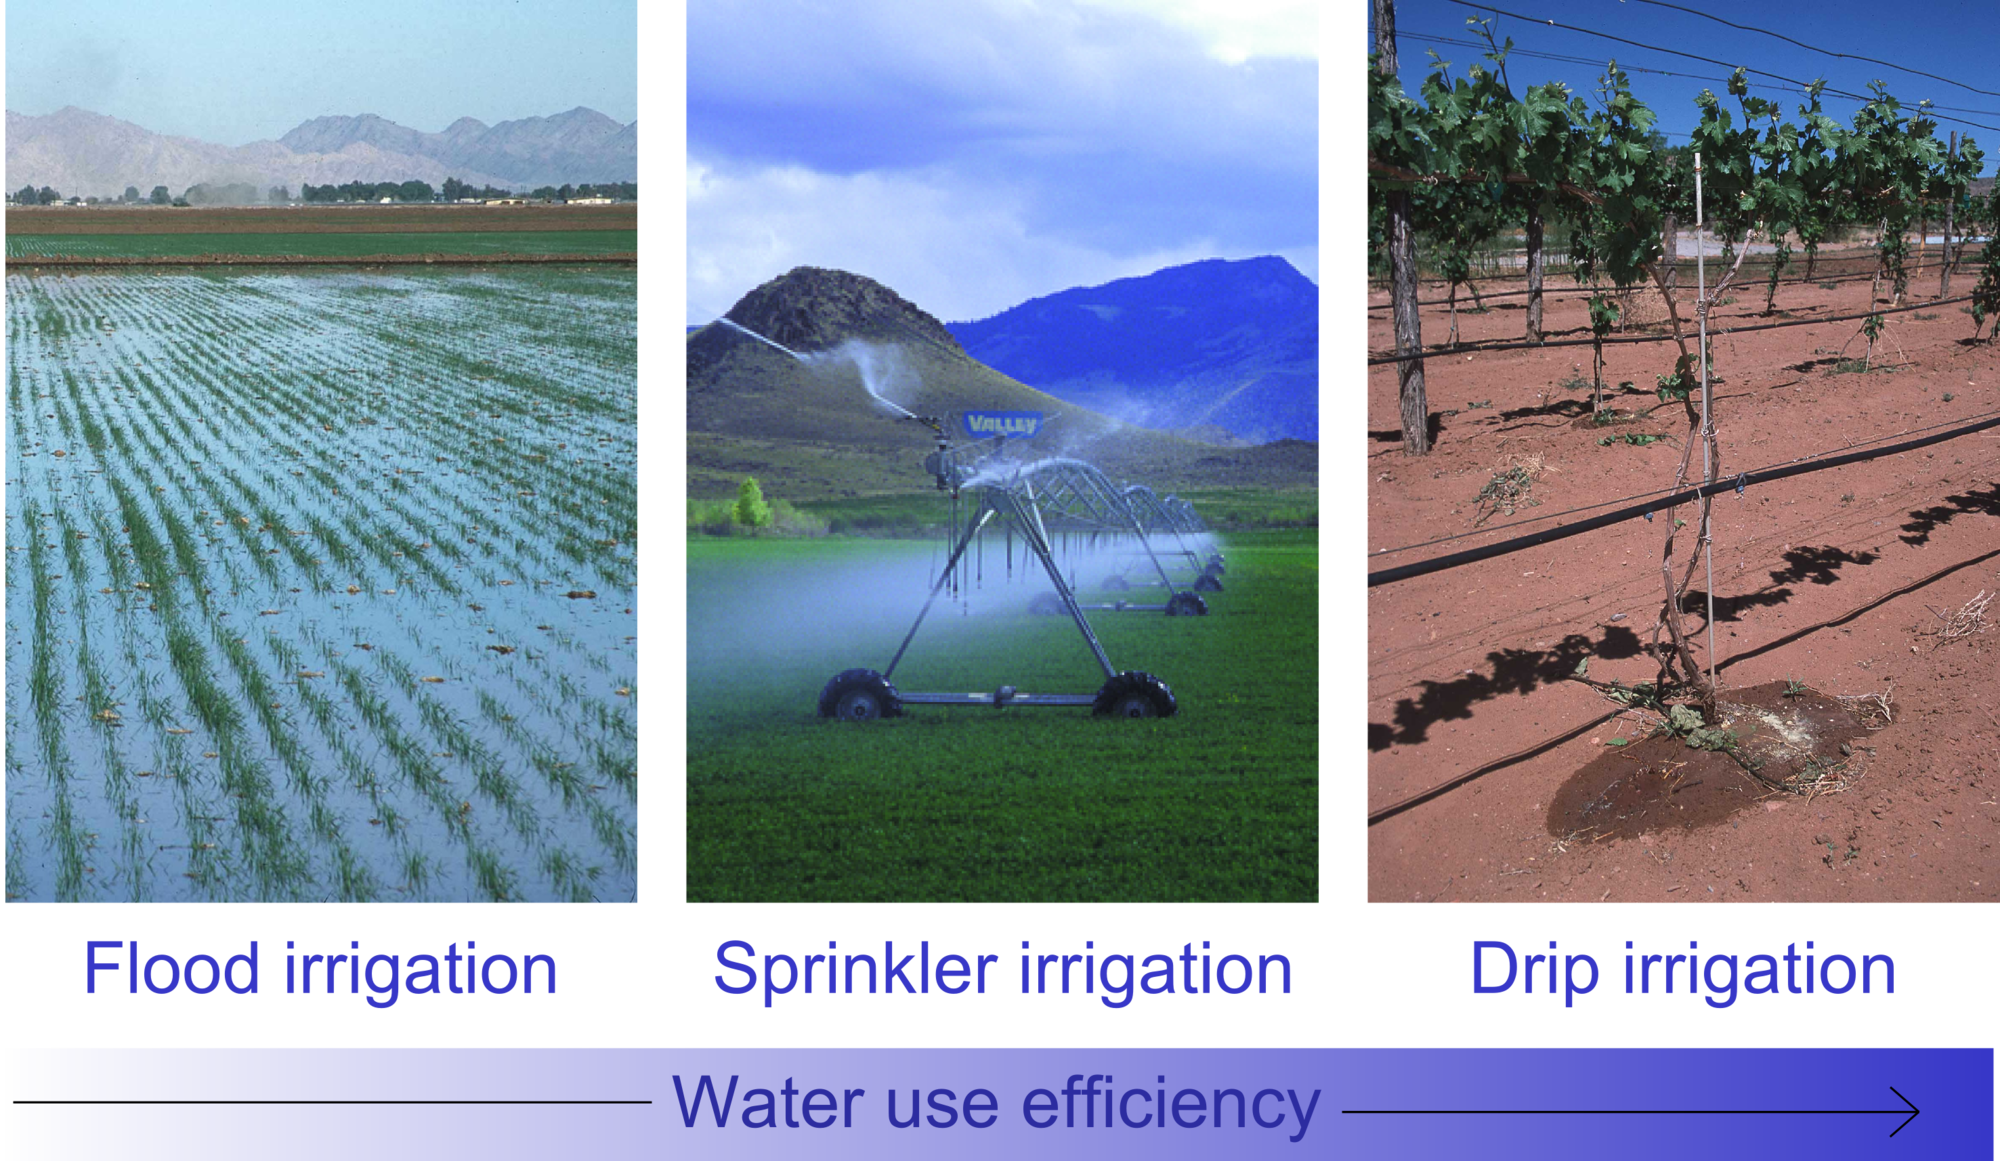 Irrigation efficiency